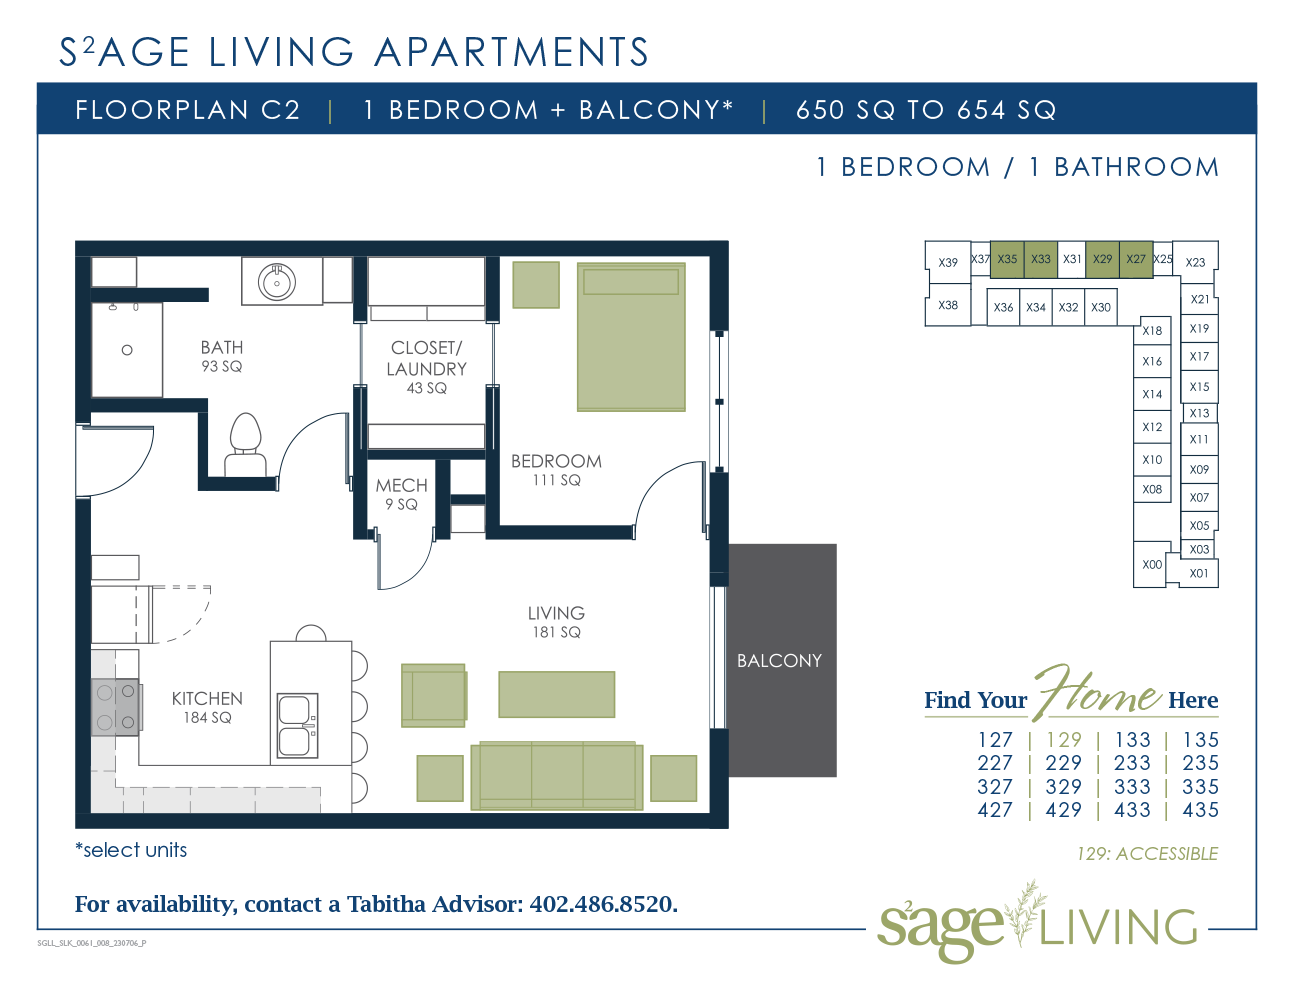 S2age Living Floor Plan, Apartment C2